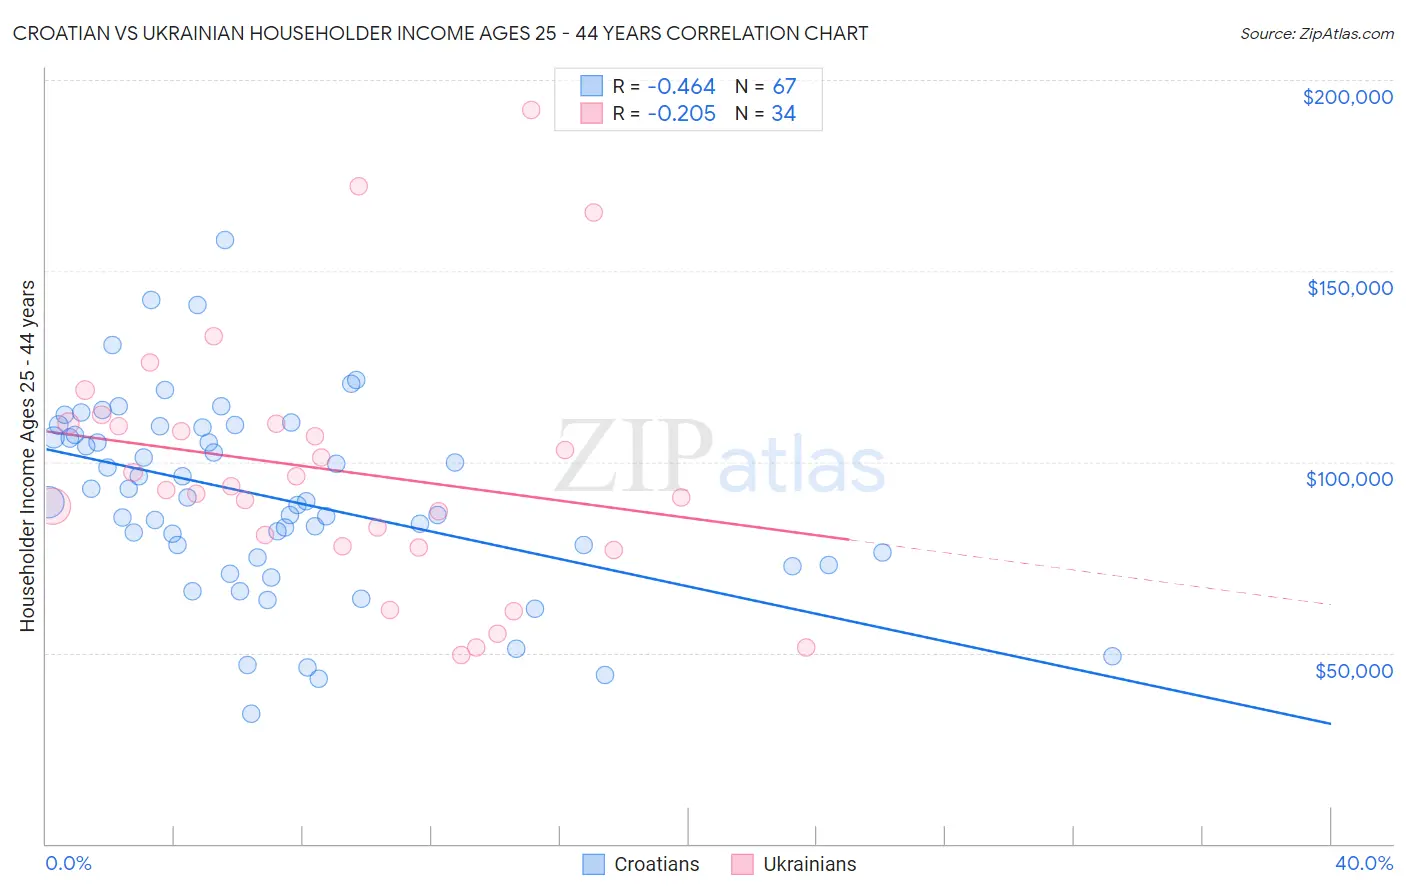 Croatian vs Ukrainian Householder Income Ages 25 - 44 years